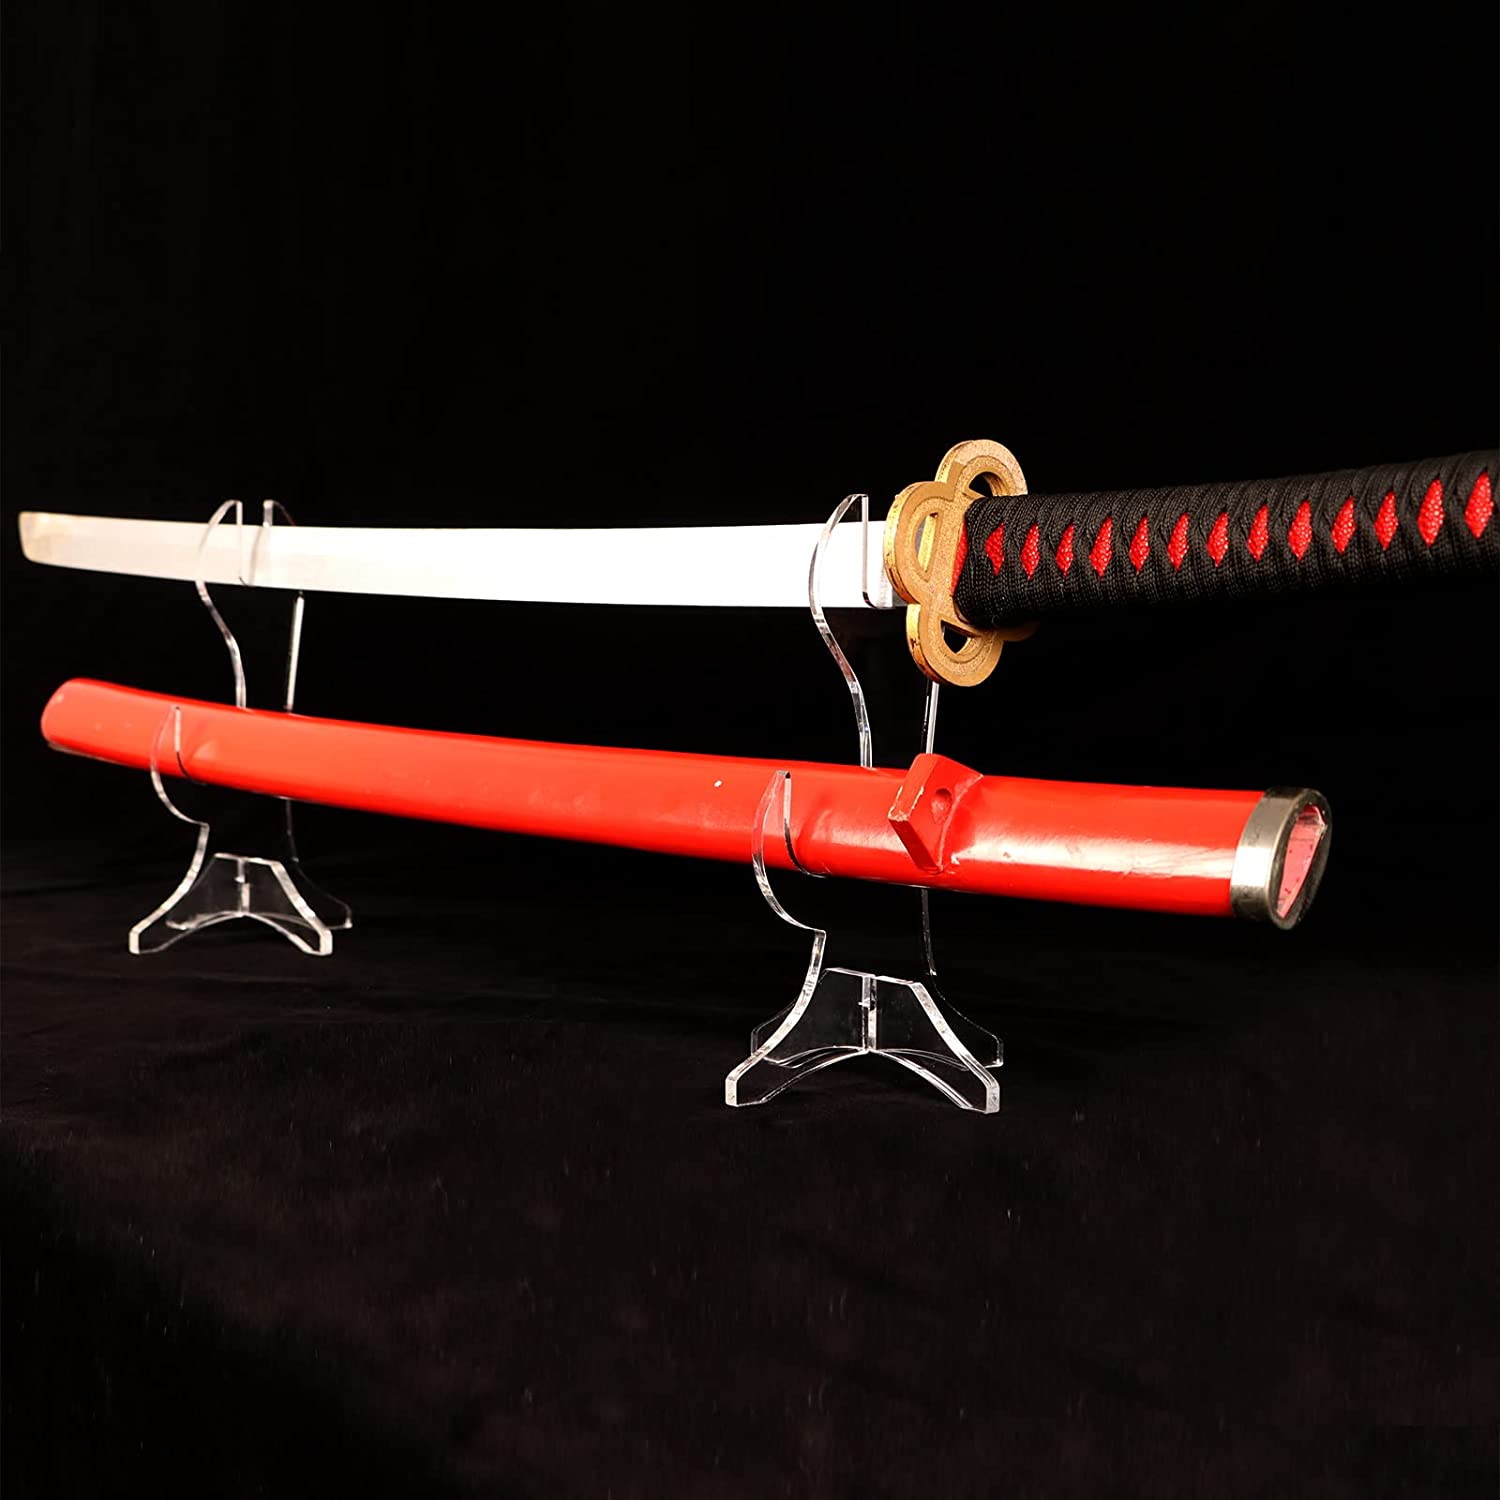 Universal Samurai Sword Katana Holder 1/2/3 Tier Stand Bracket